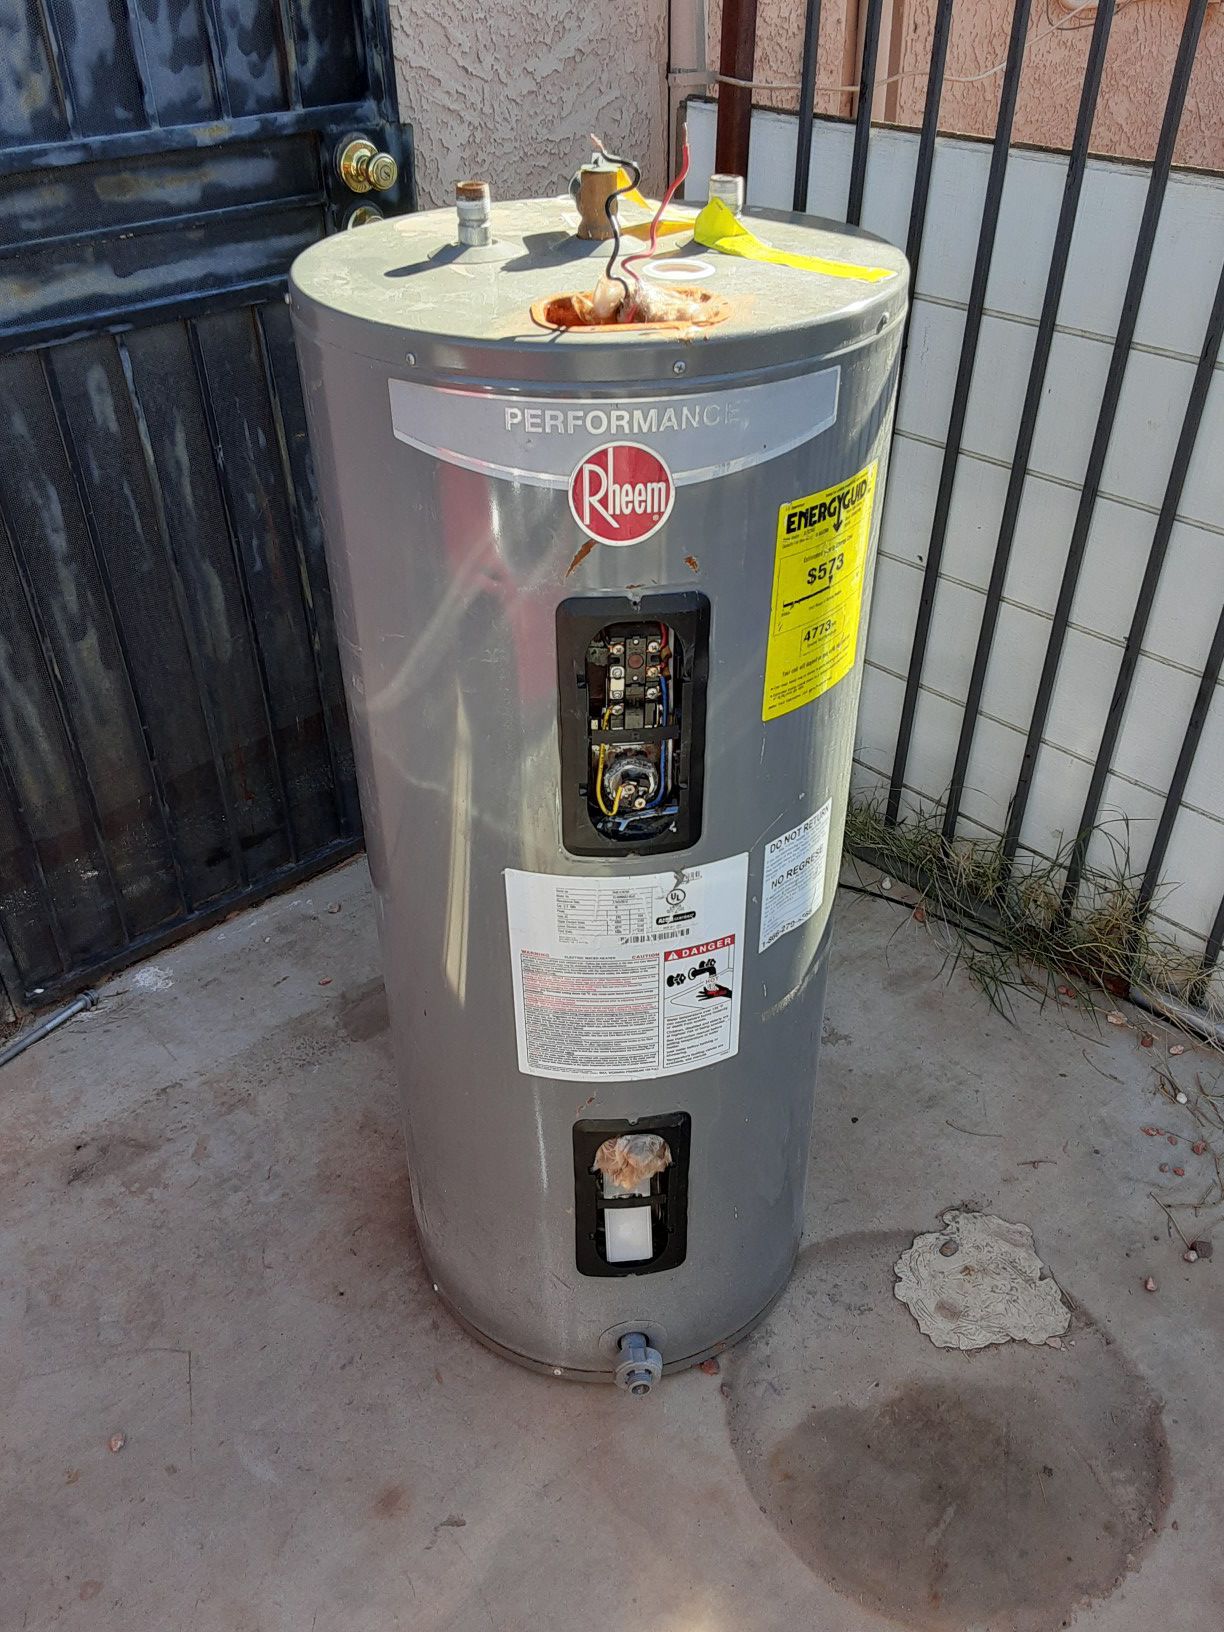 Rheem Performance water heater 40 gallons